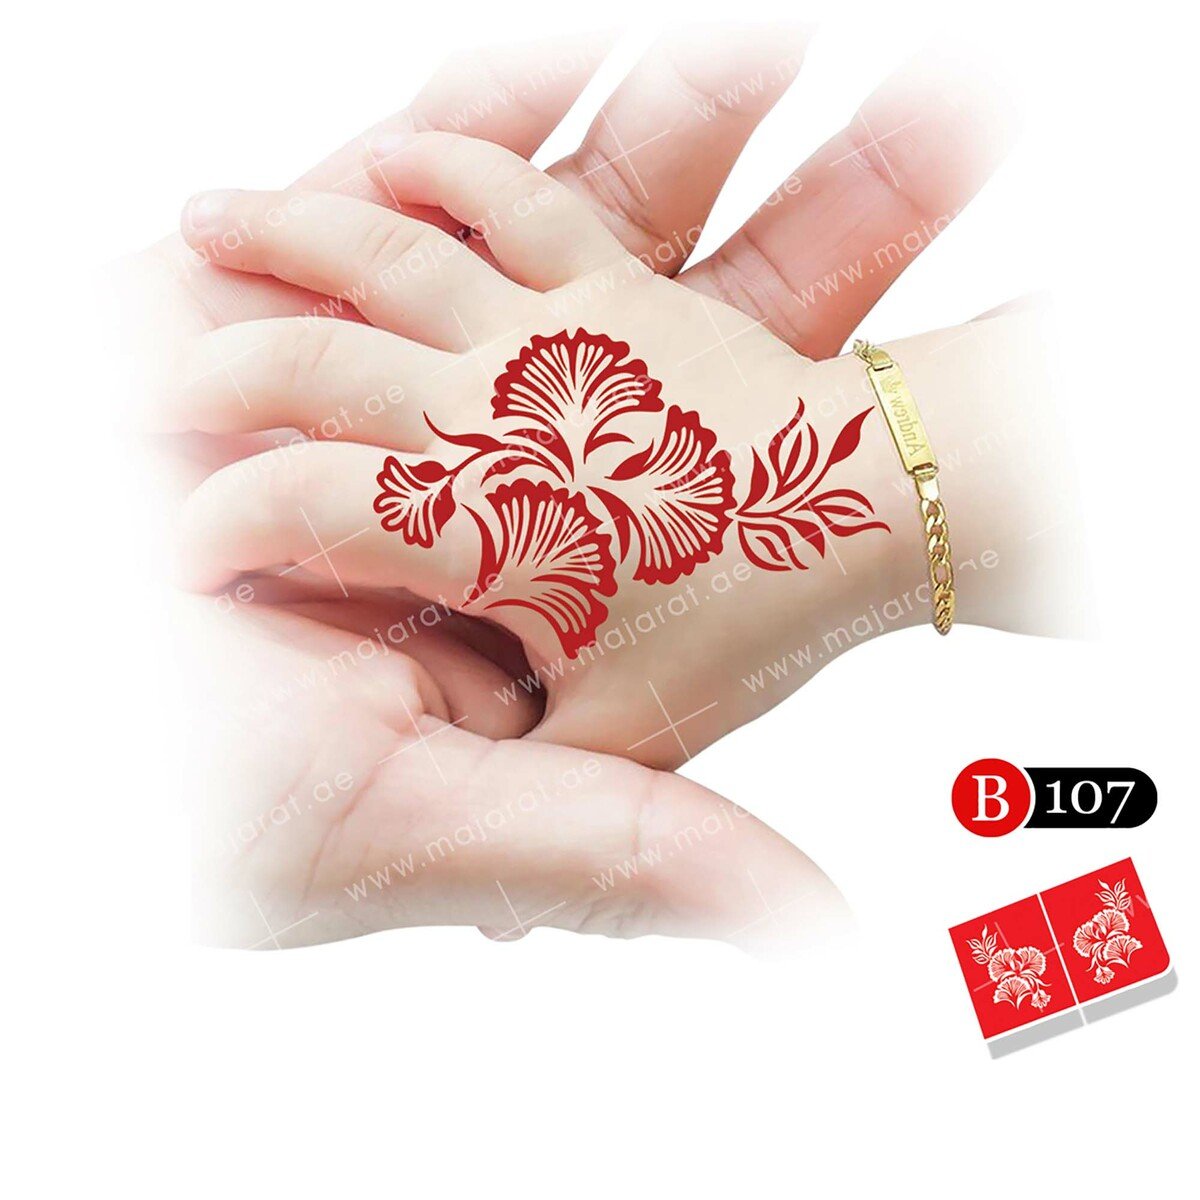 Majarat Henna Design Sticker Baby B107 15x10cm